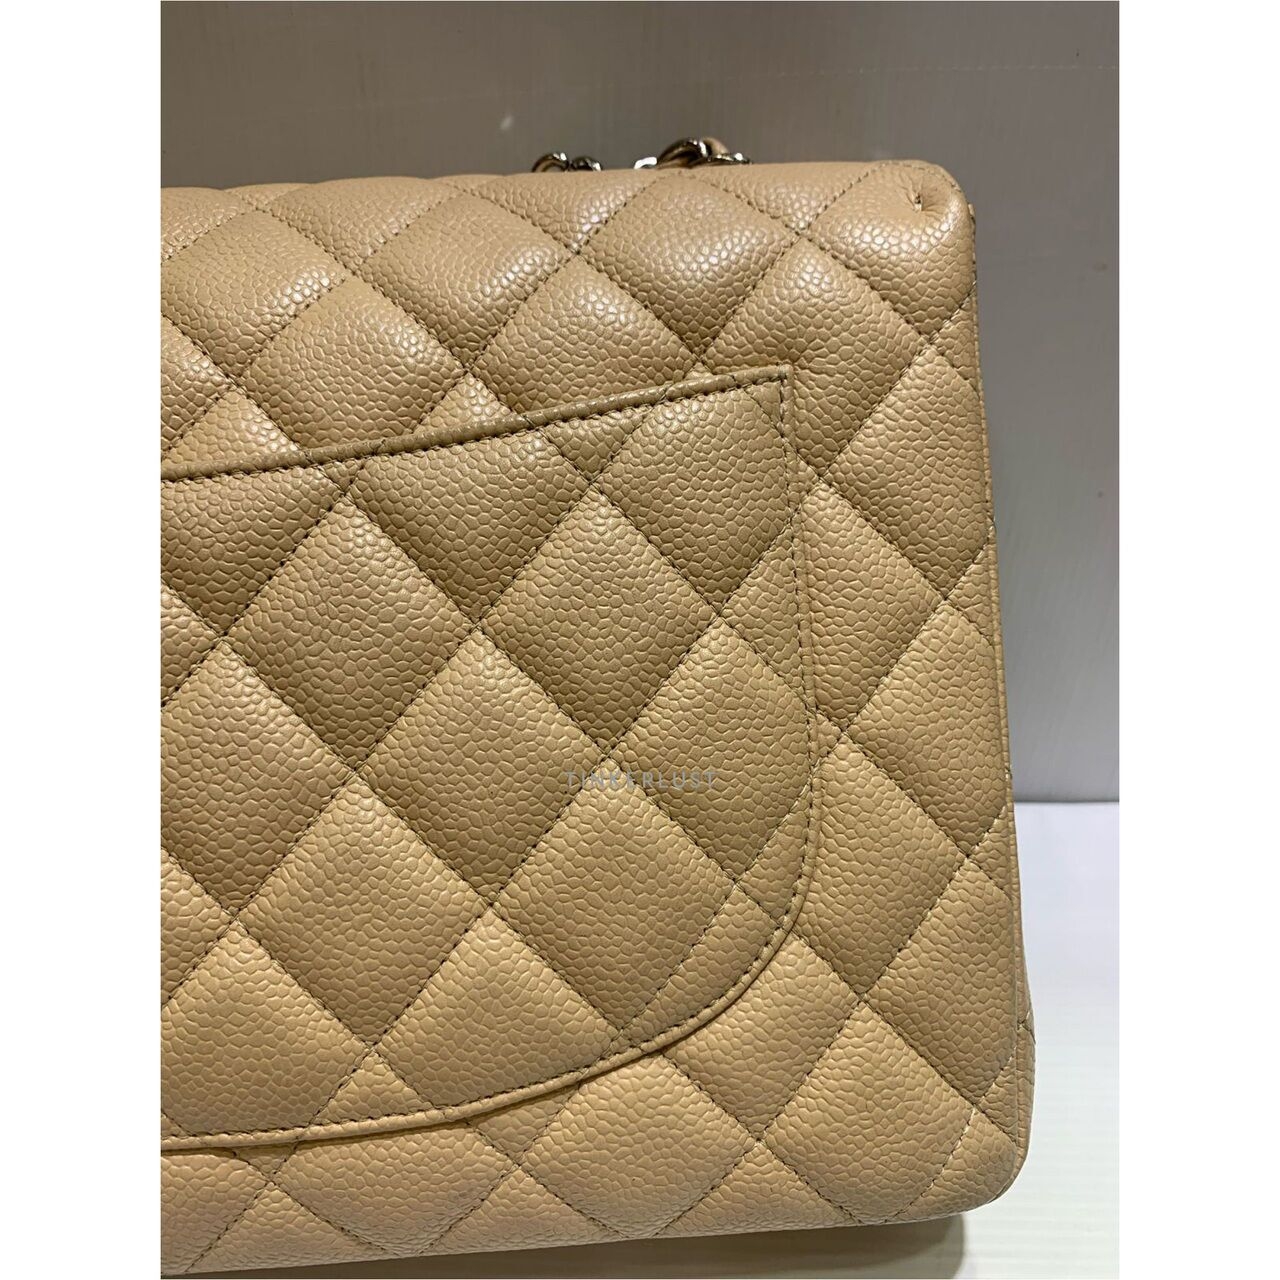 Chanel Classic Jumbo Single Flap Beige Caviar SHW #12 Shoulder Bag